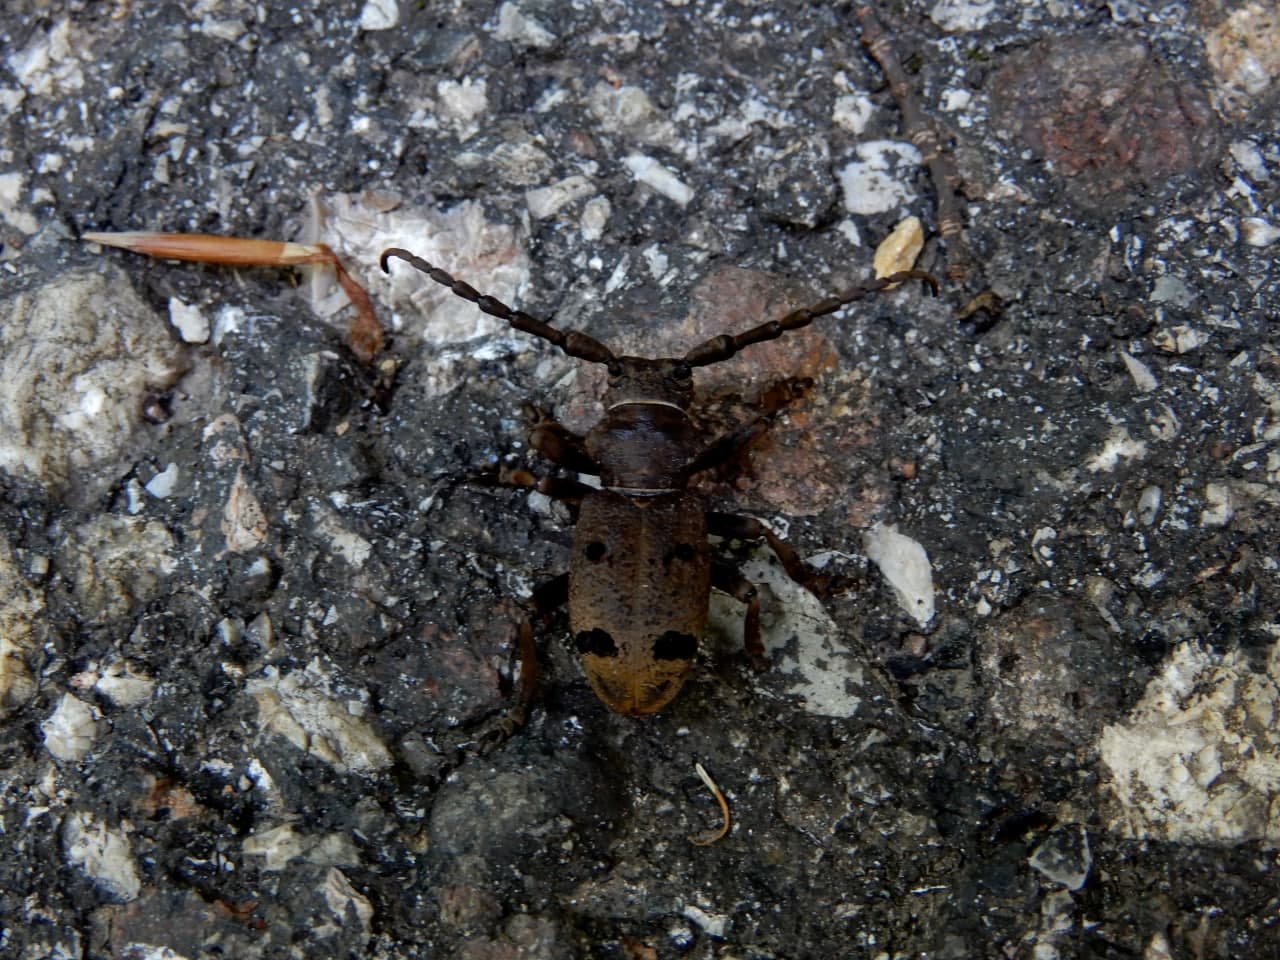 Cerambycidae: Herophila tristis?  S